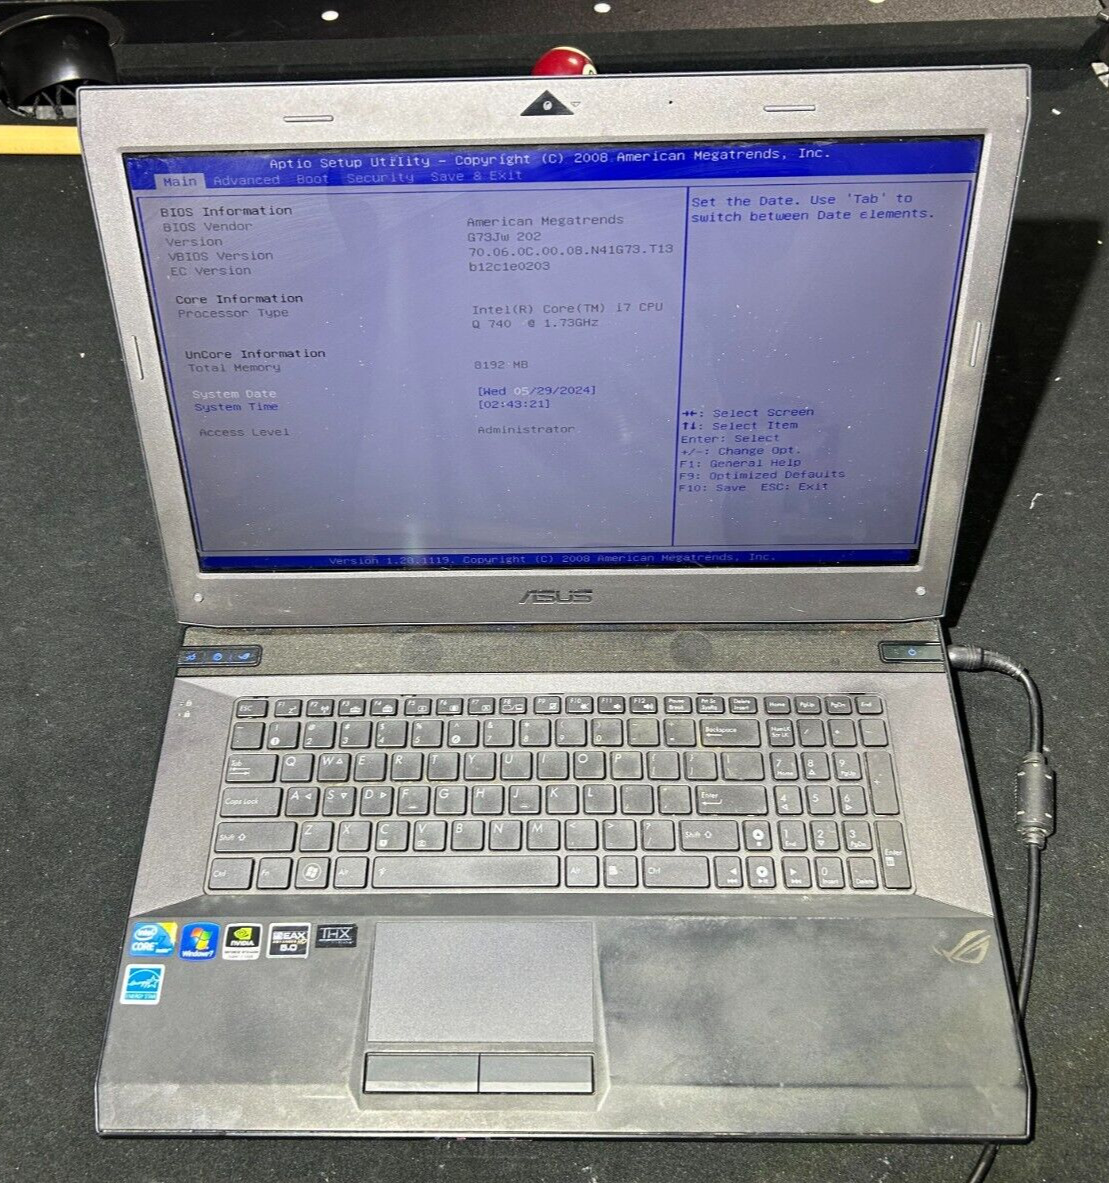 Asus G73JW Laptop Intel Core i7-Q740 1.7GHz 6GB RAM NO HDD NVIDIA GeForce GTX460